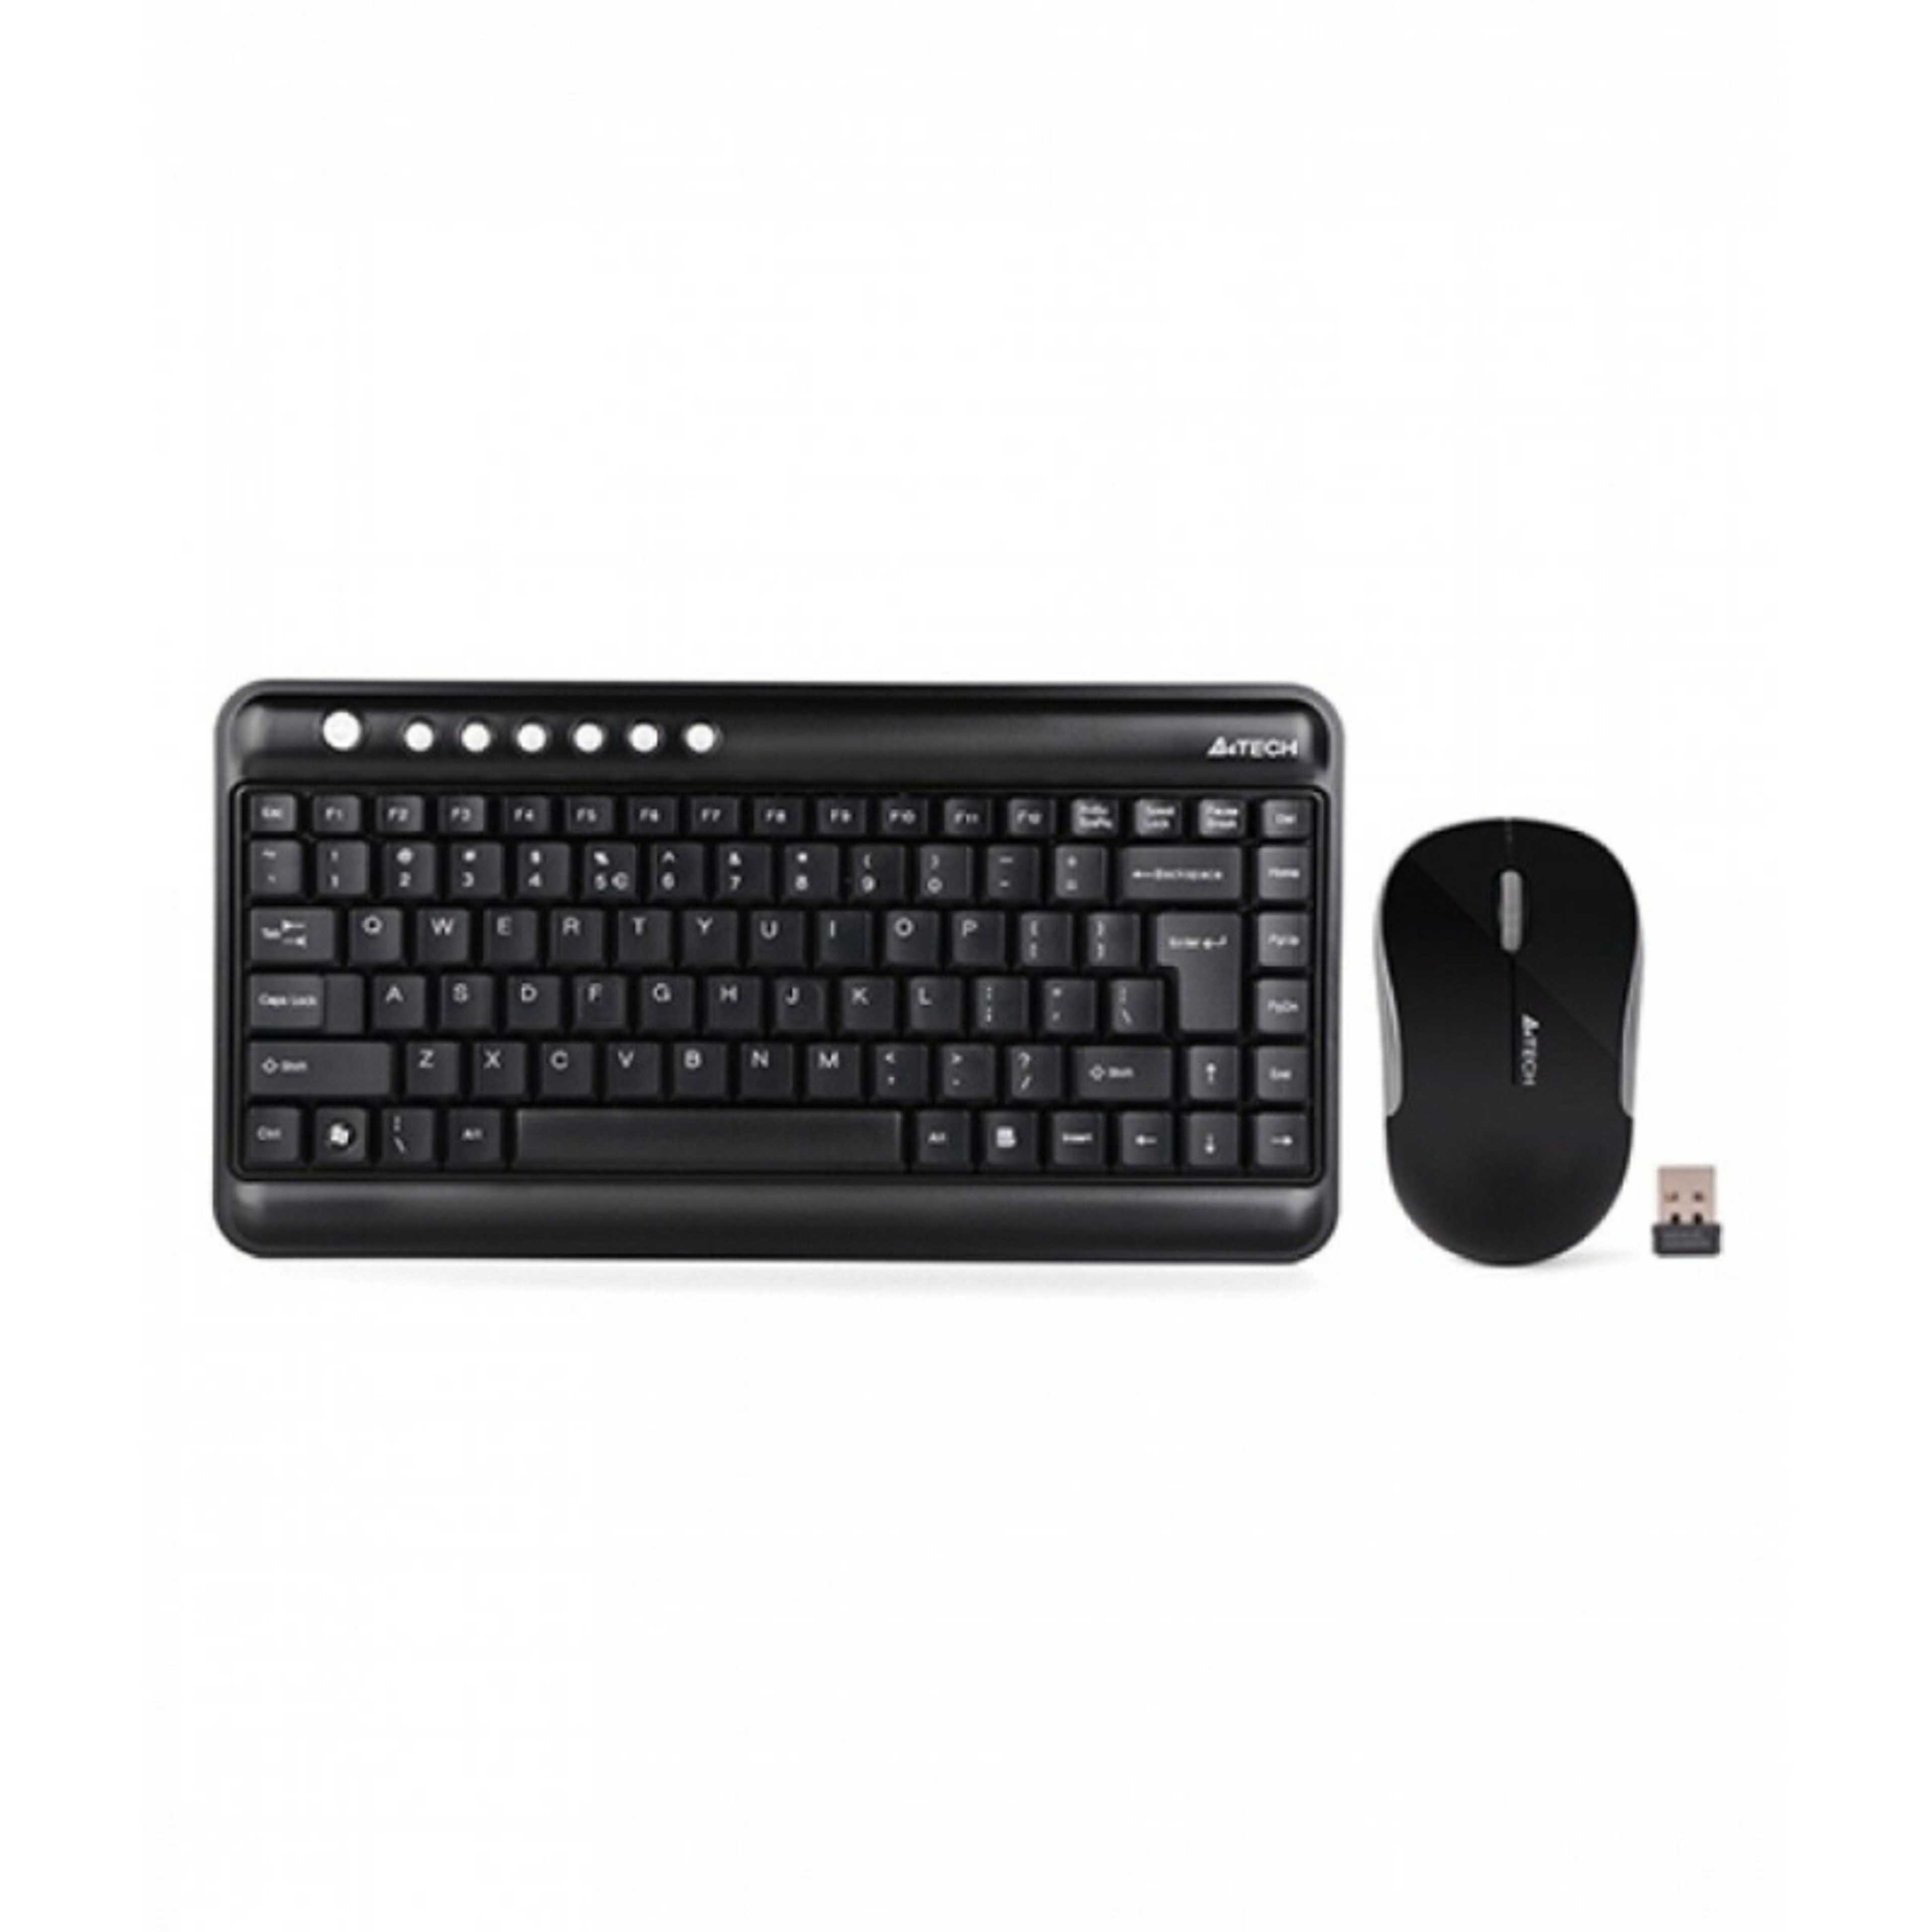 A4TECH 3300N Mini Wireless Keyboard & Mouse Combo Set